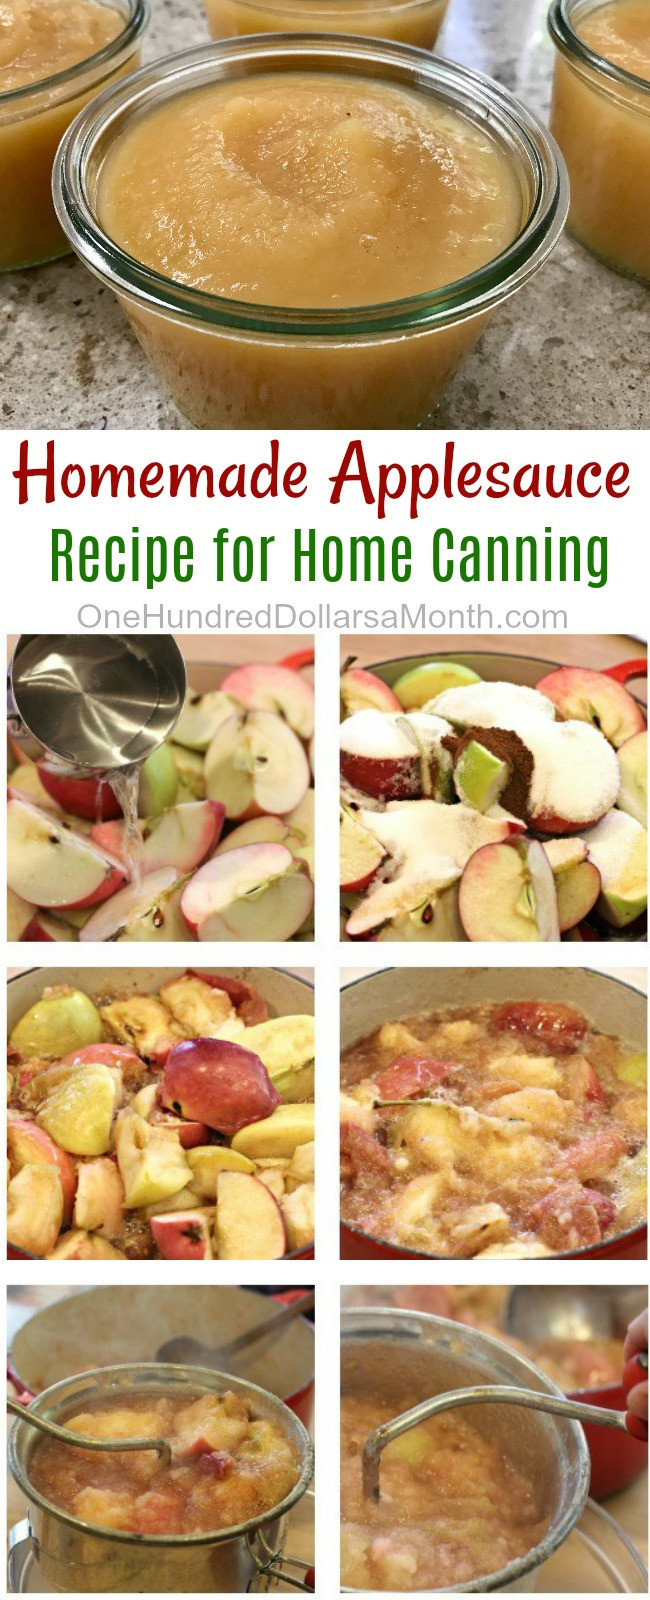 Canning Homemade Applesauce
 Canning 101 How to Make Homemade Applesauce e